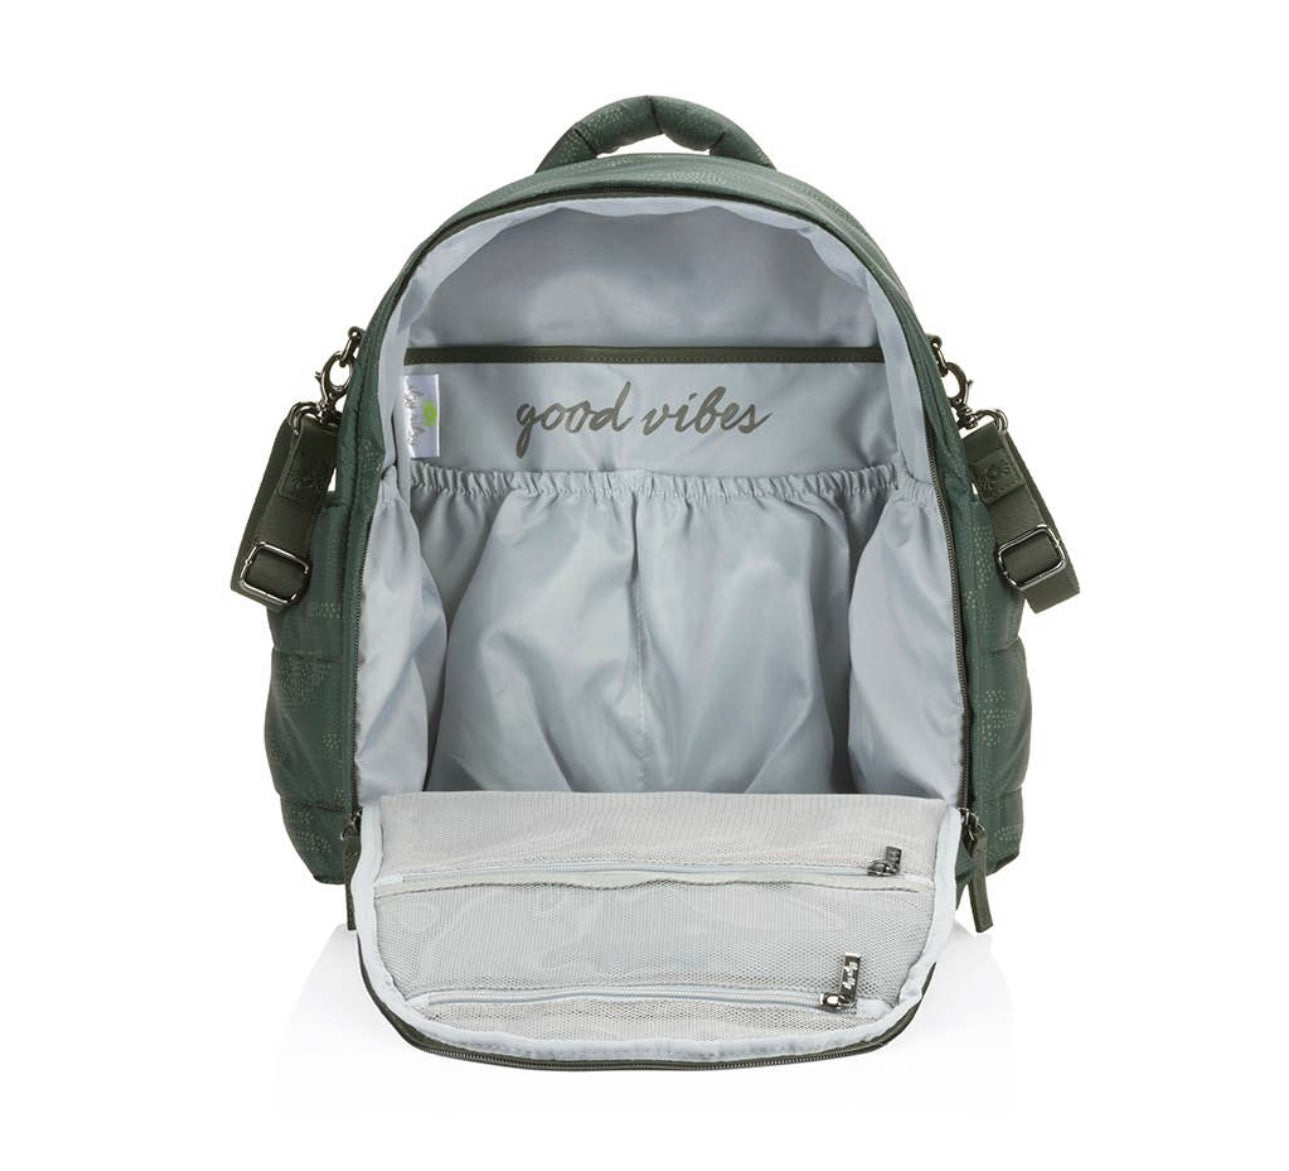 Dream Backpack Diaper Bag Cloud Camo